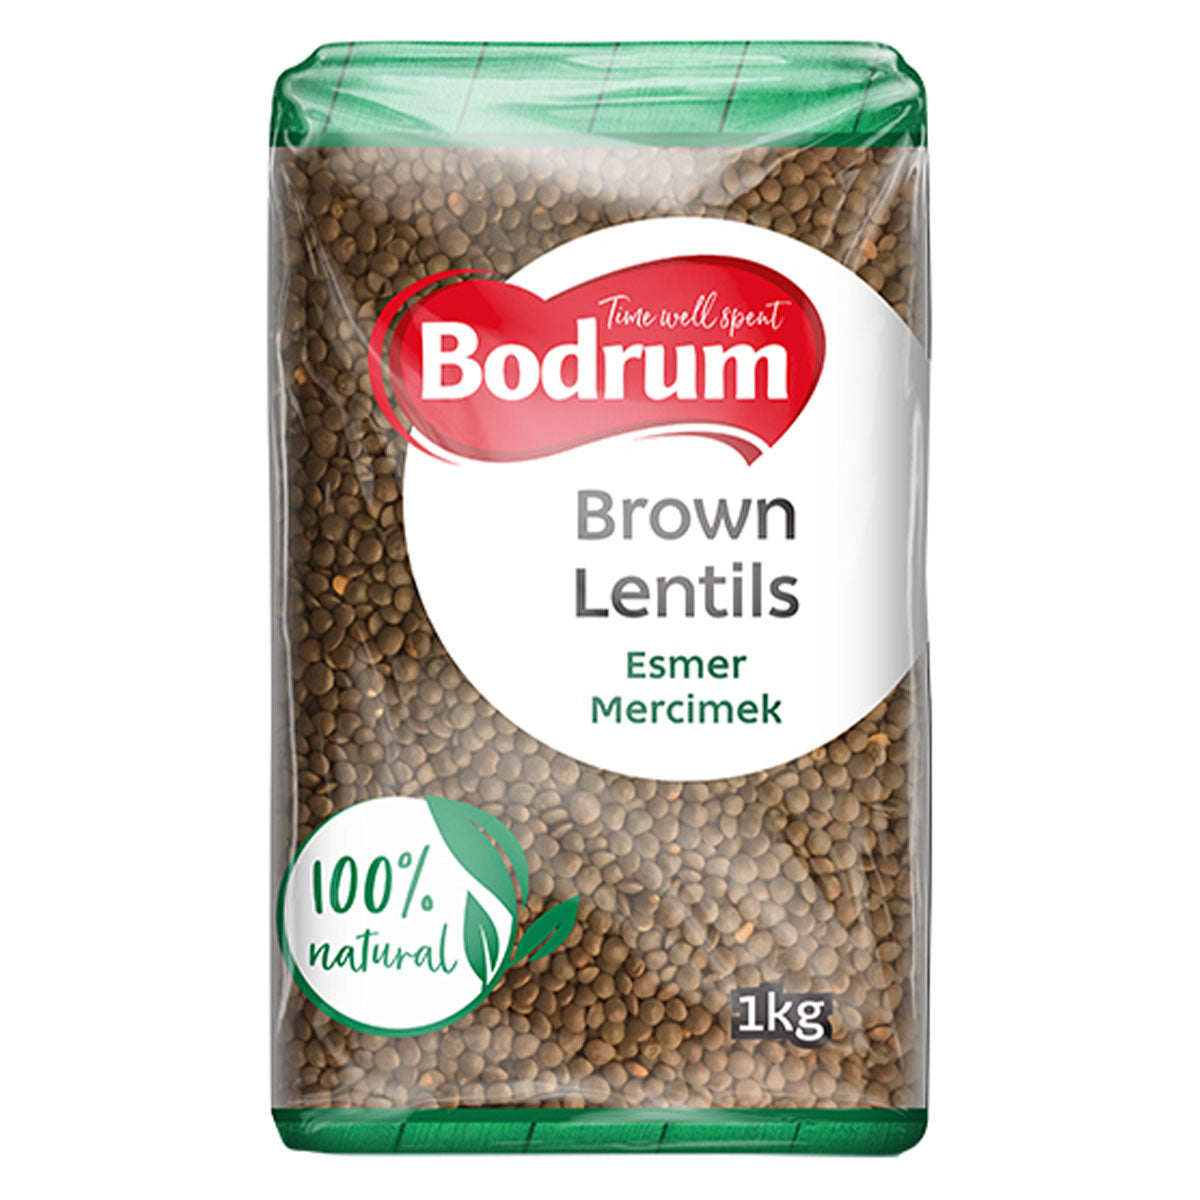 Bodrum - Brown Lentils - 1kg - Continental Food Store